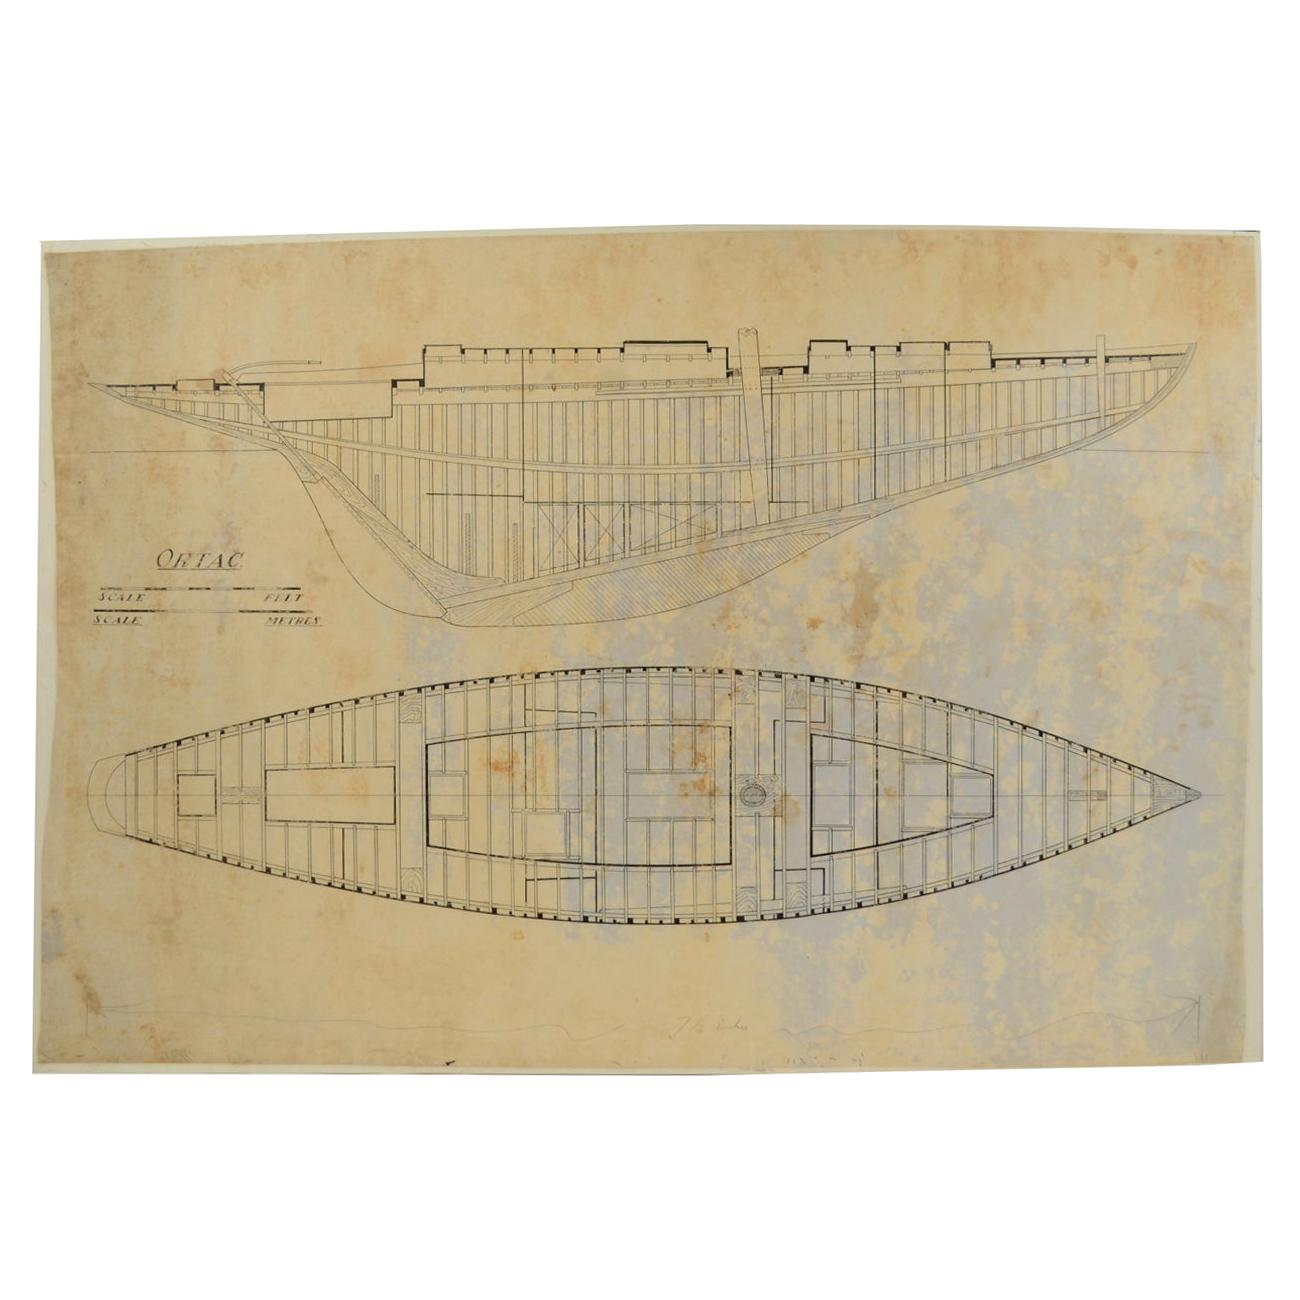 Antikes Projekt des Schiffes Ortac Morgan Giles Shipyard Uffa Fox aus den 1930er Jahren